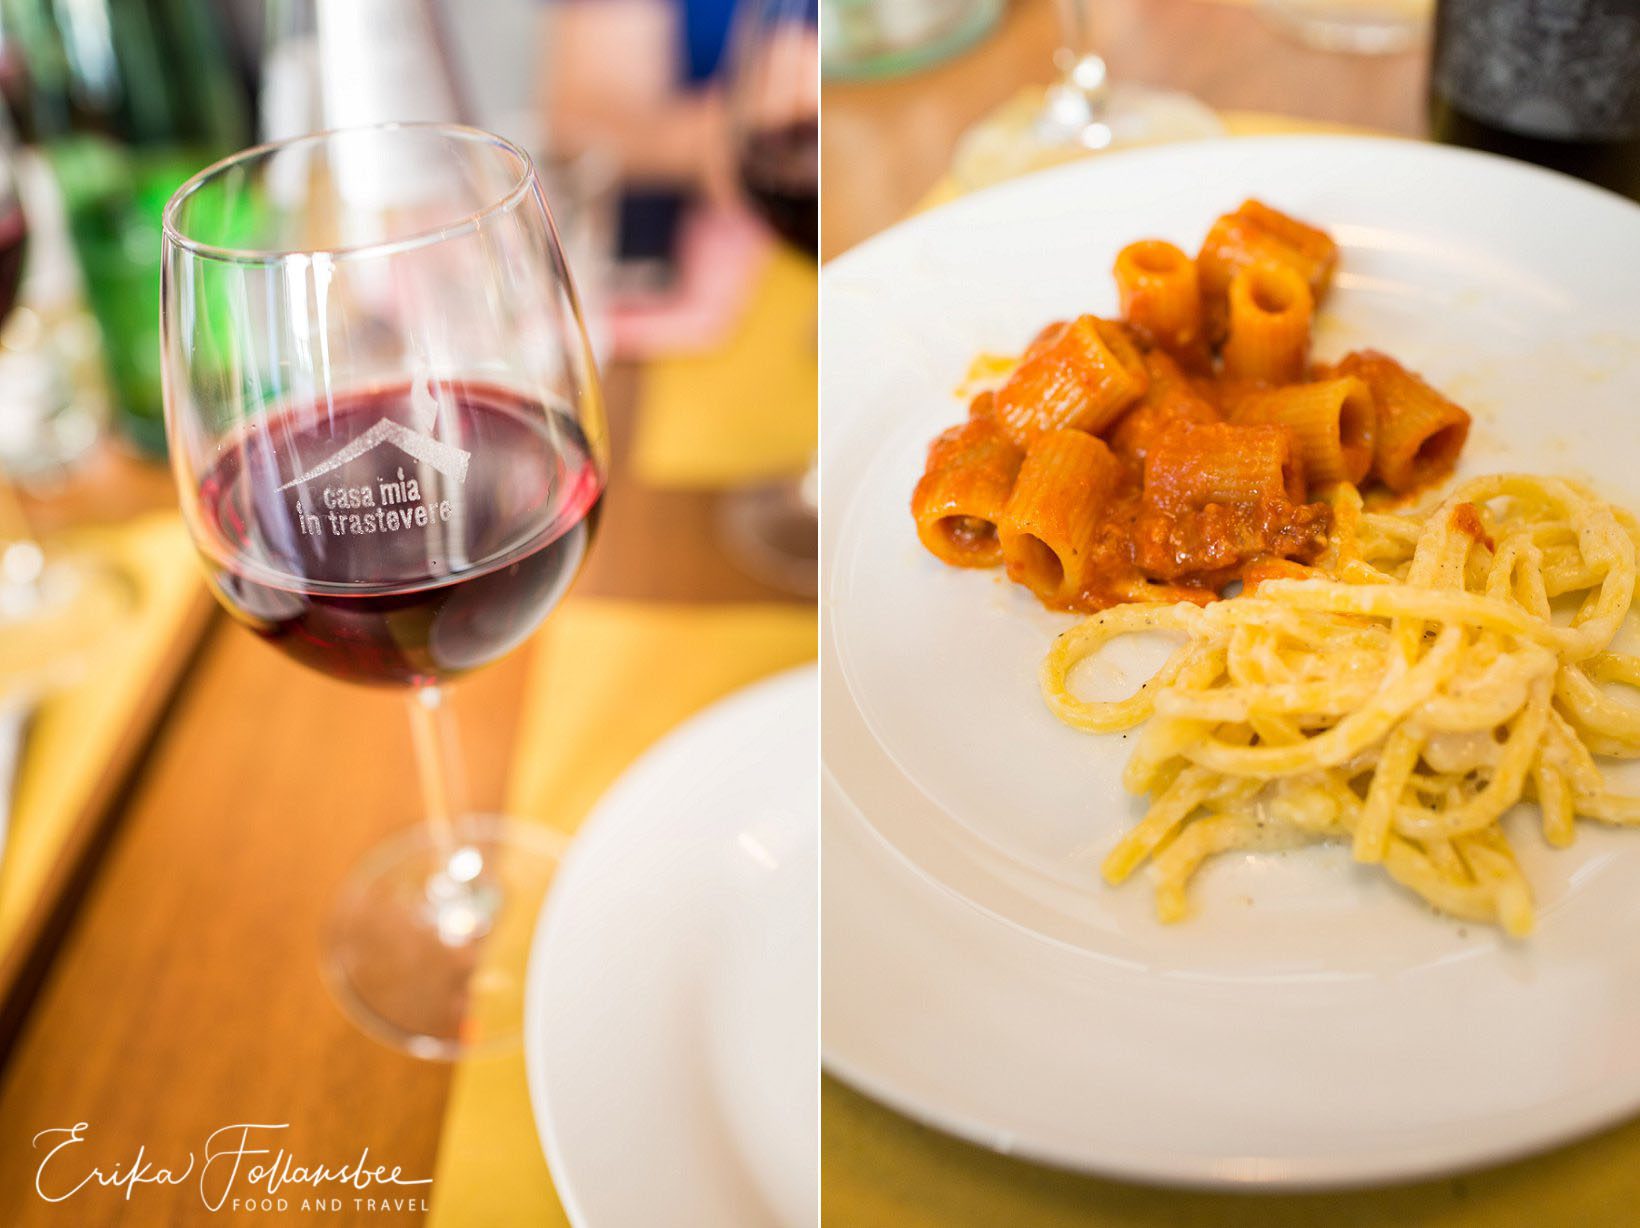 2 kinds of Roman pasta sampled at Casa Mia in Trastevere